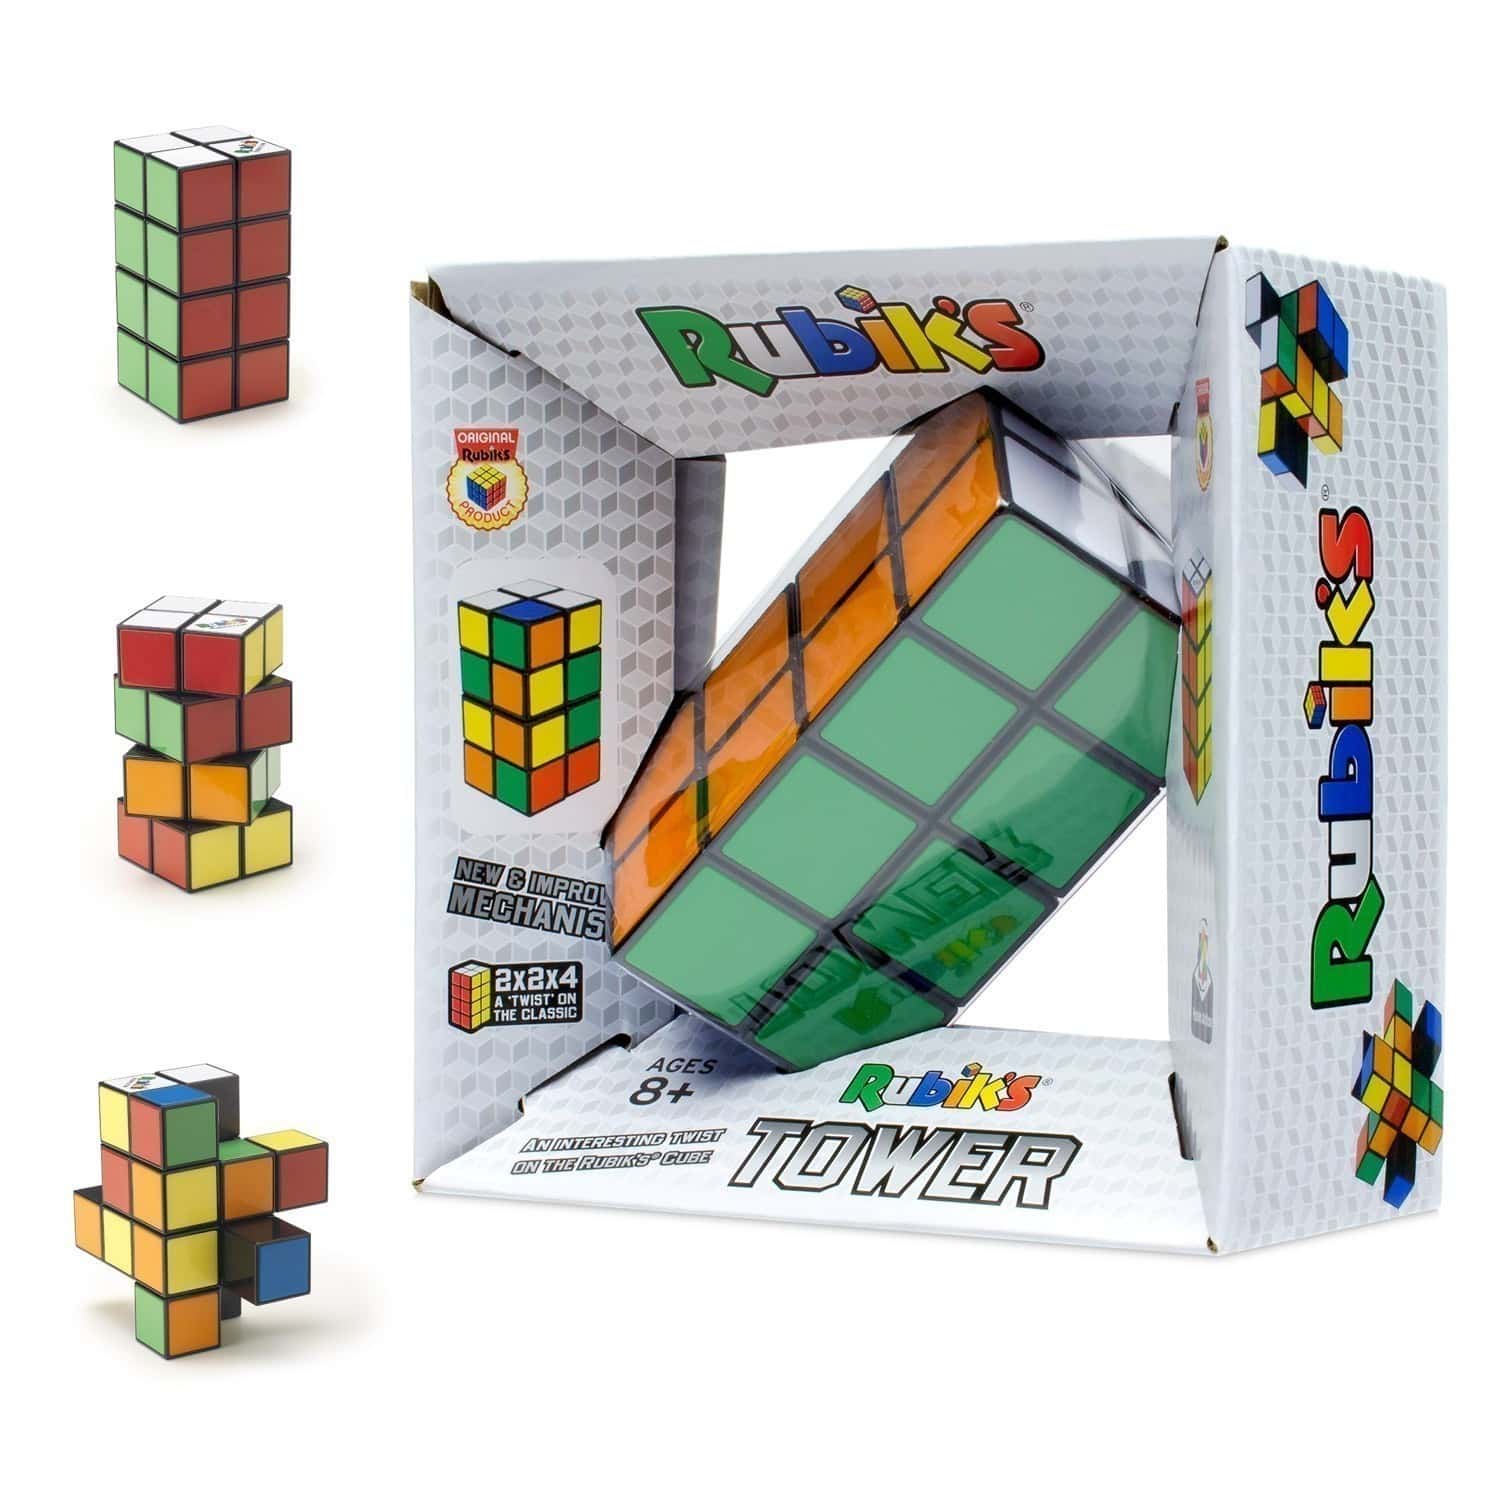 Rubik's Tower Puzzle